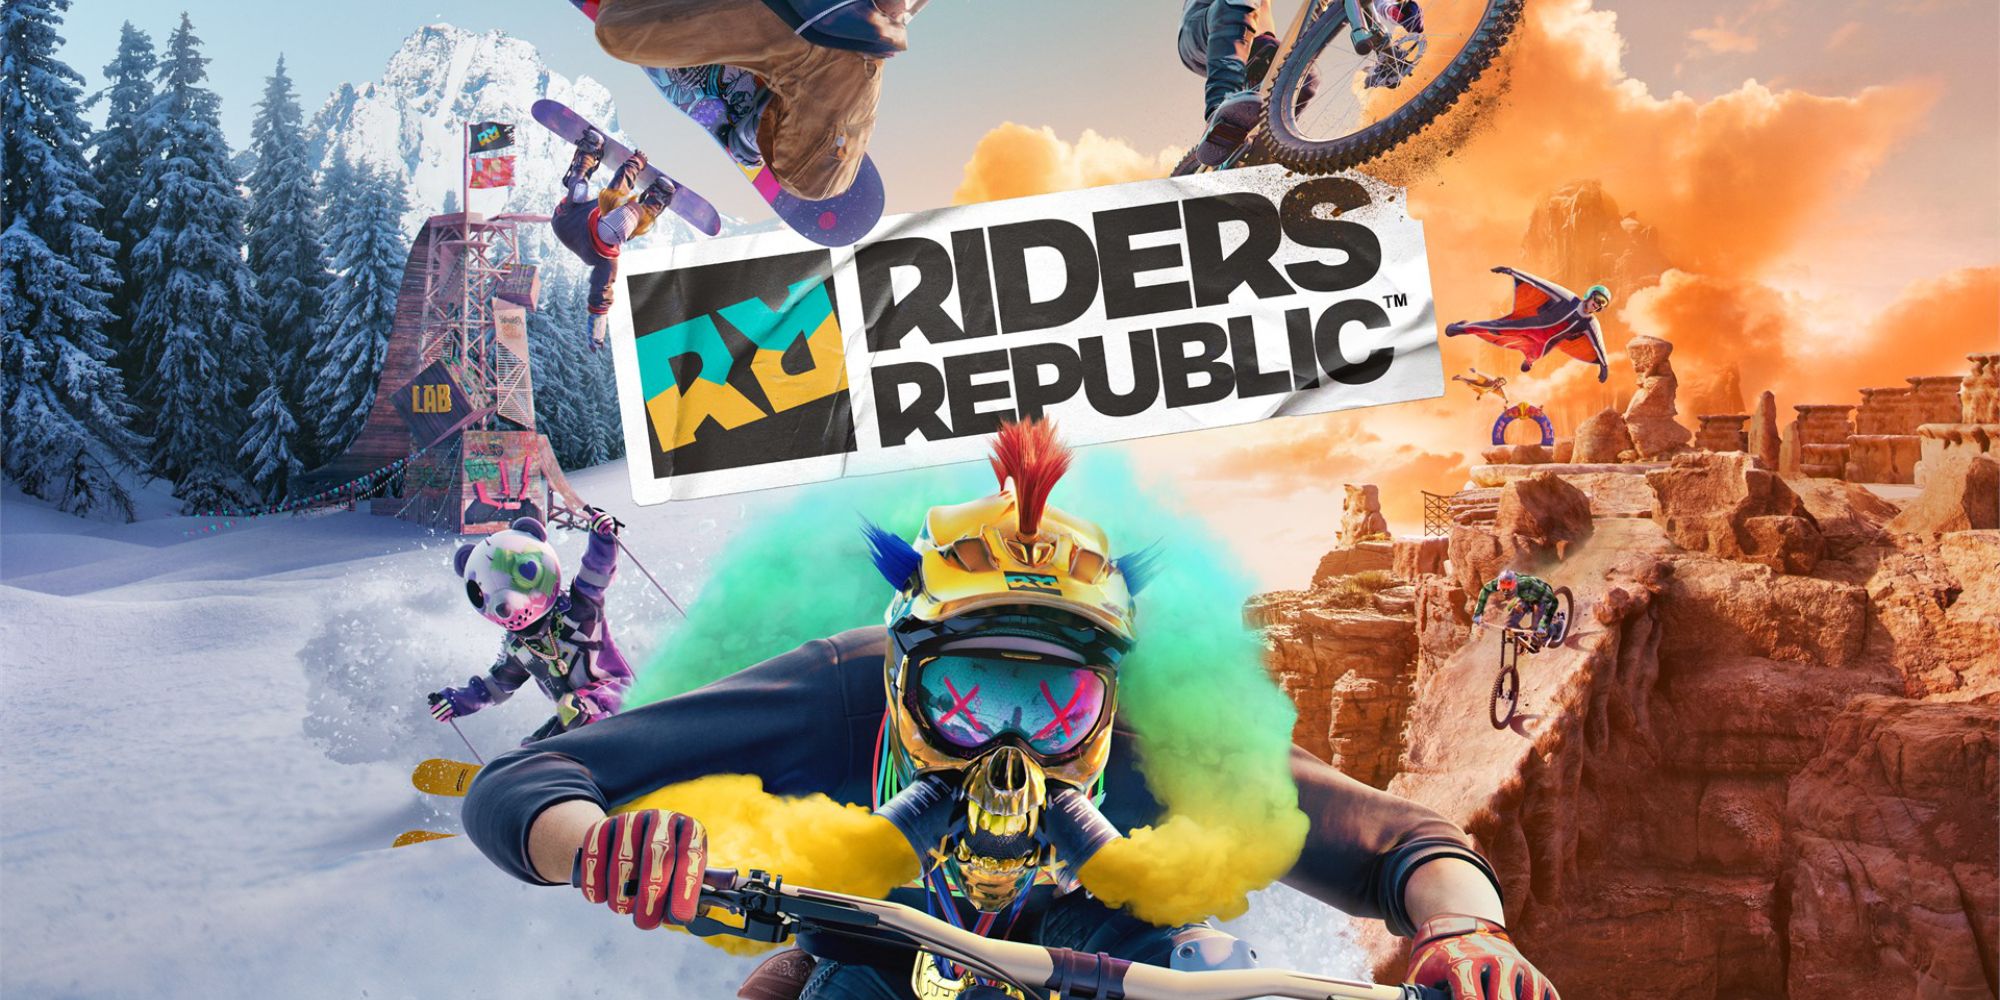 Riders Republic riders, smoke, and title